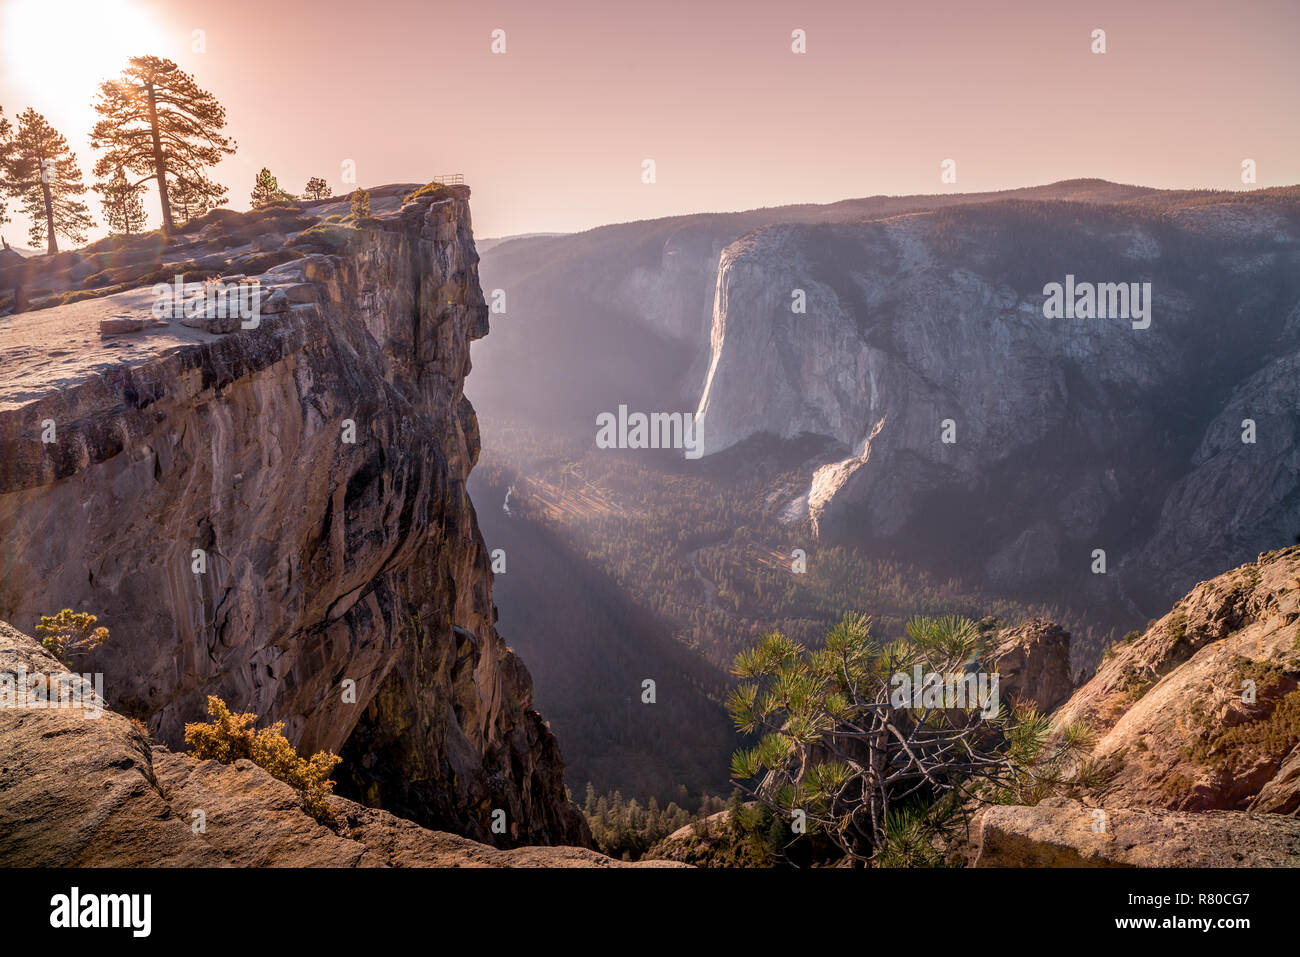 Yosemite National Park, including Half Dome, Yosemite Falls, and El Capitan over the Merced River in Yosemite Valley Stock Photo